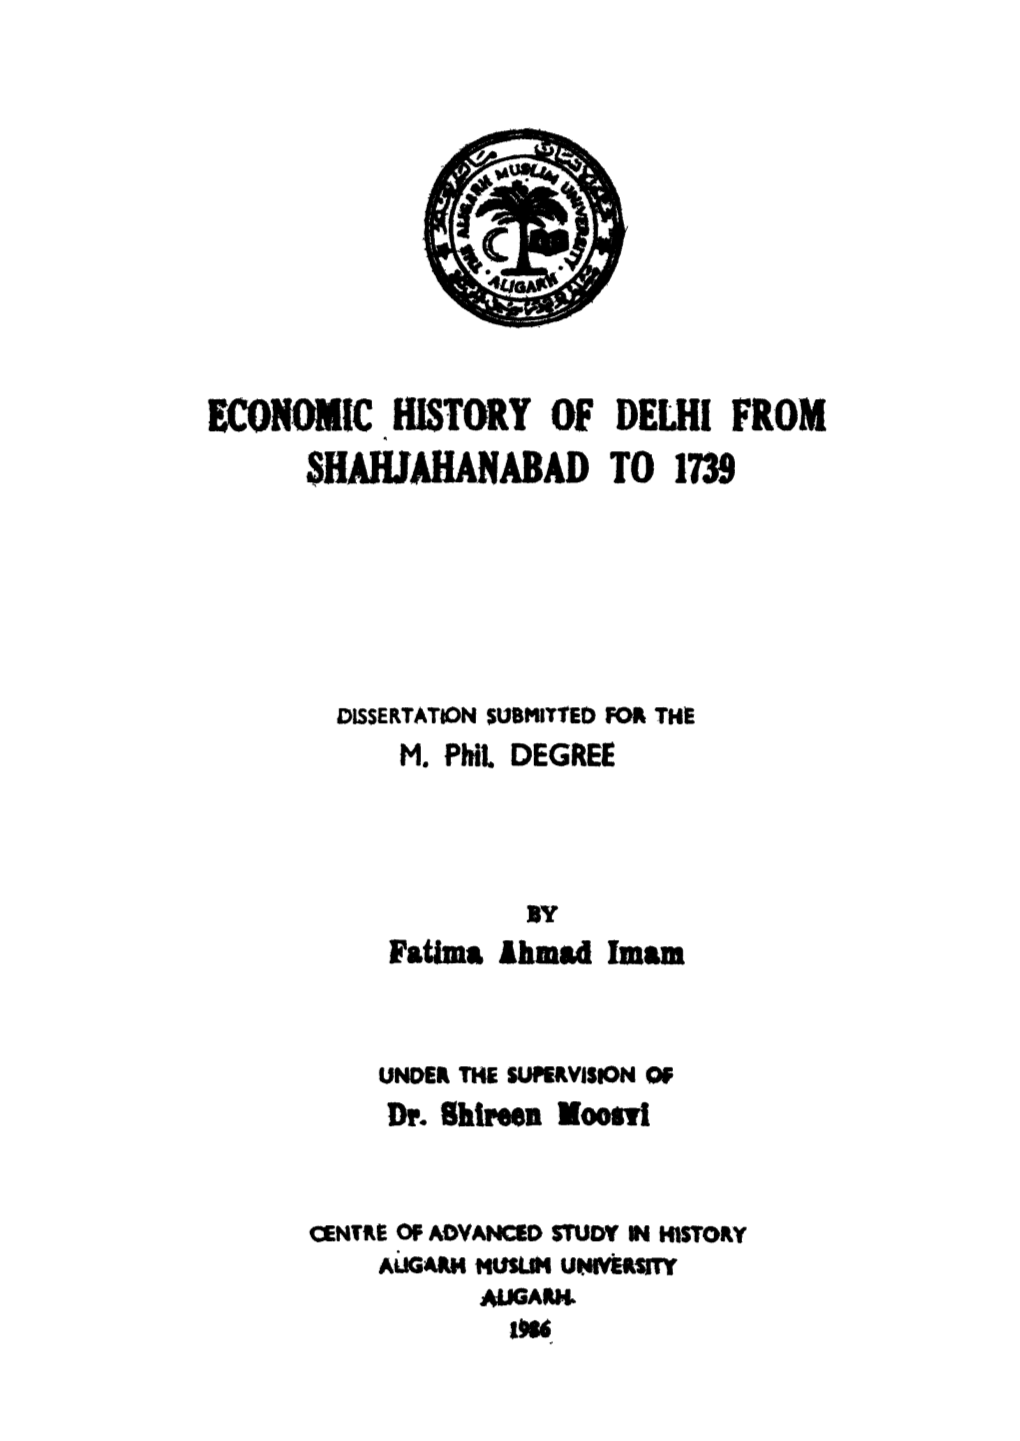 ECOHOMK: Miim of DELHI from SHAHJAHANABAD to 1739